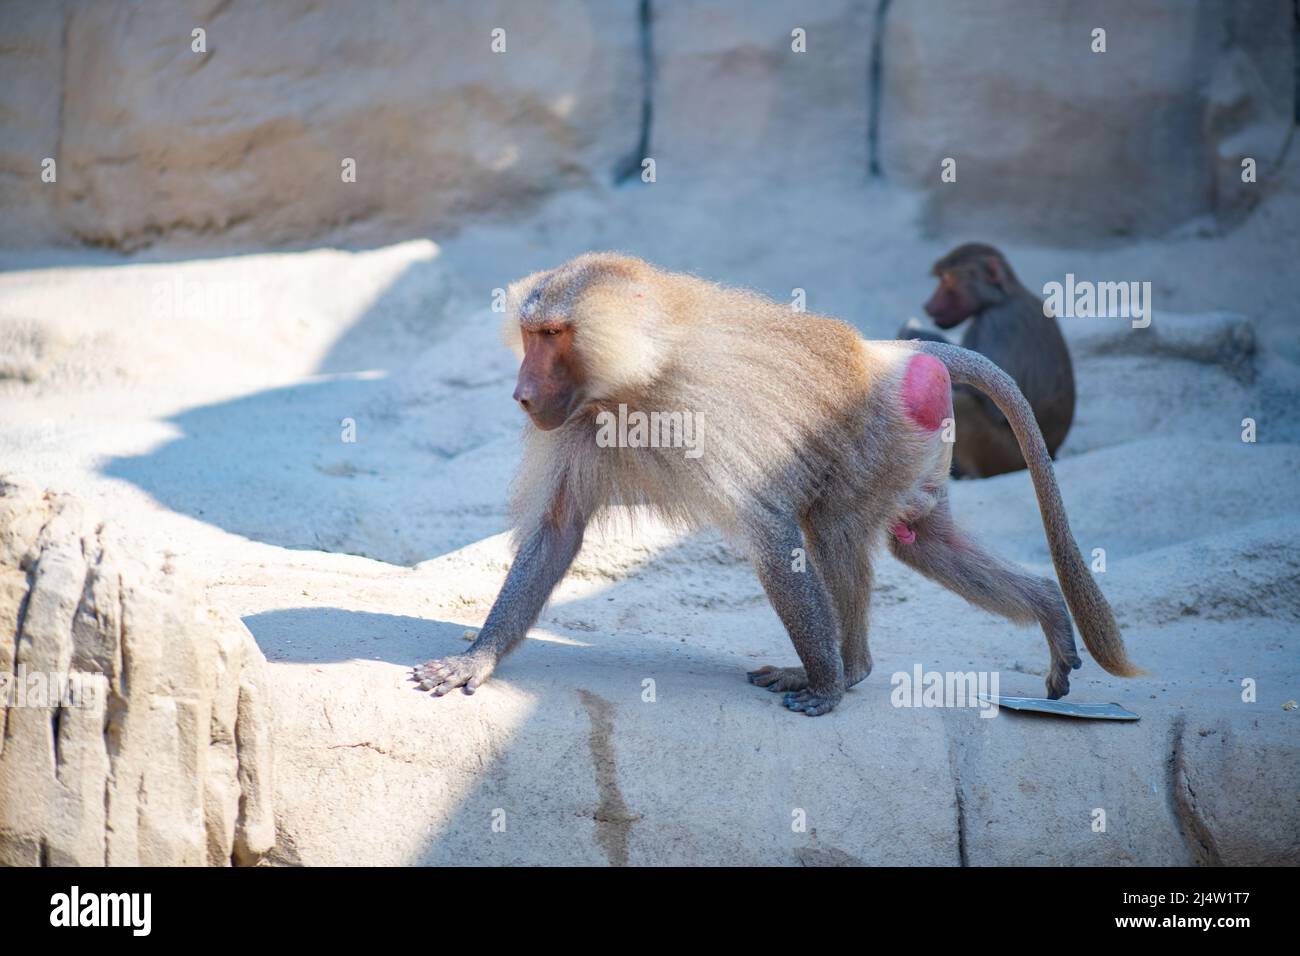 a huge primate walks around the zoo Stock Photo